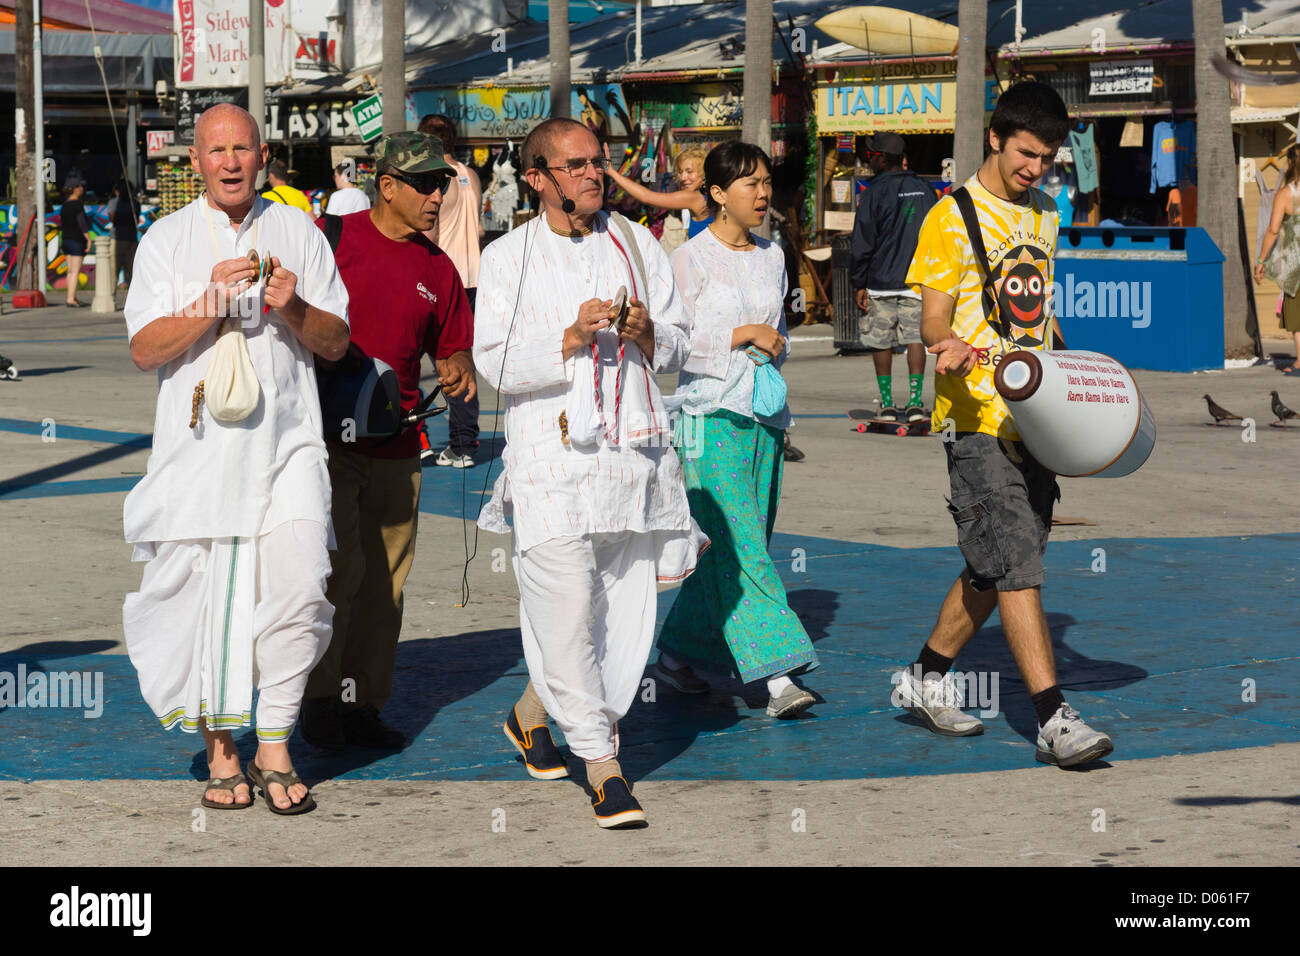 Venice Beach, LA, California seaside resort - Hare Krishna Buddhist monks march and chant prayer mantra. Stock Photo